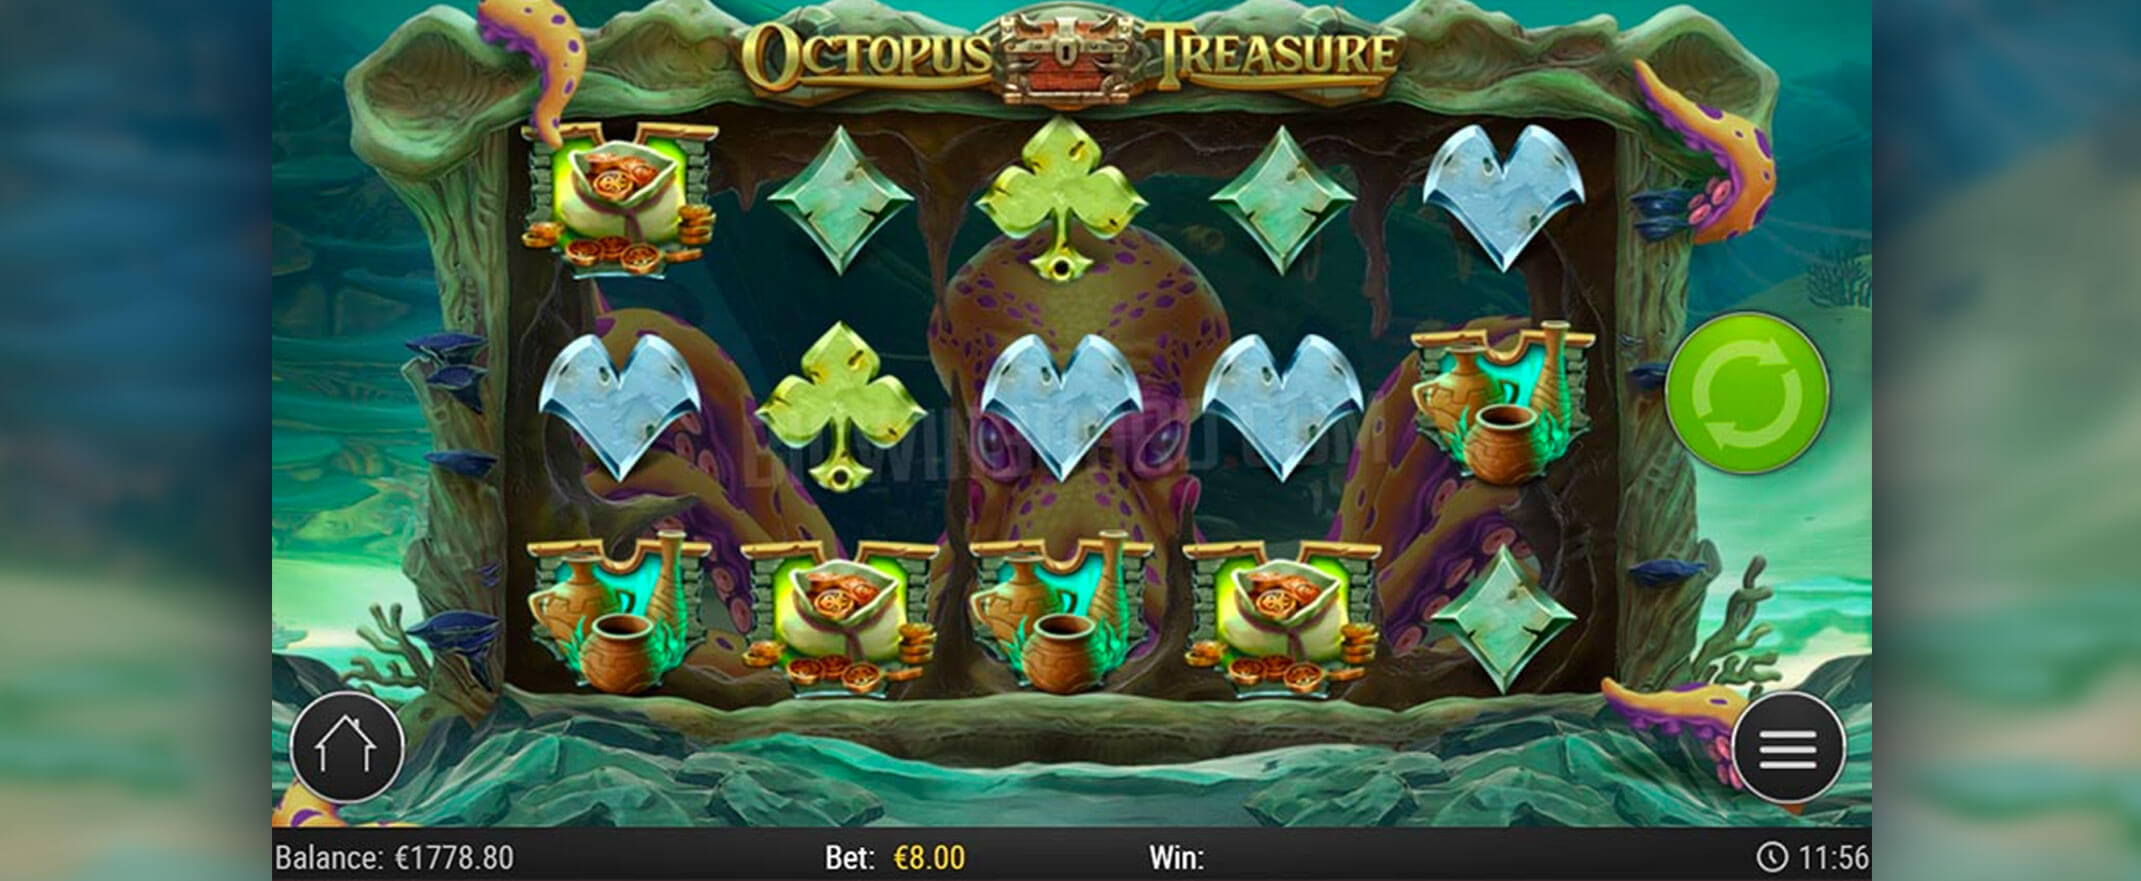 Octopus Treasure slot screenshot